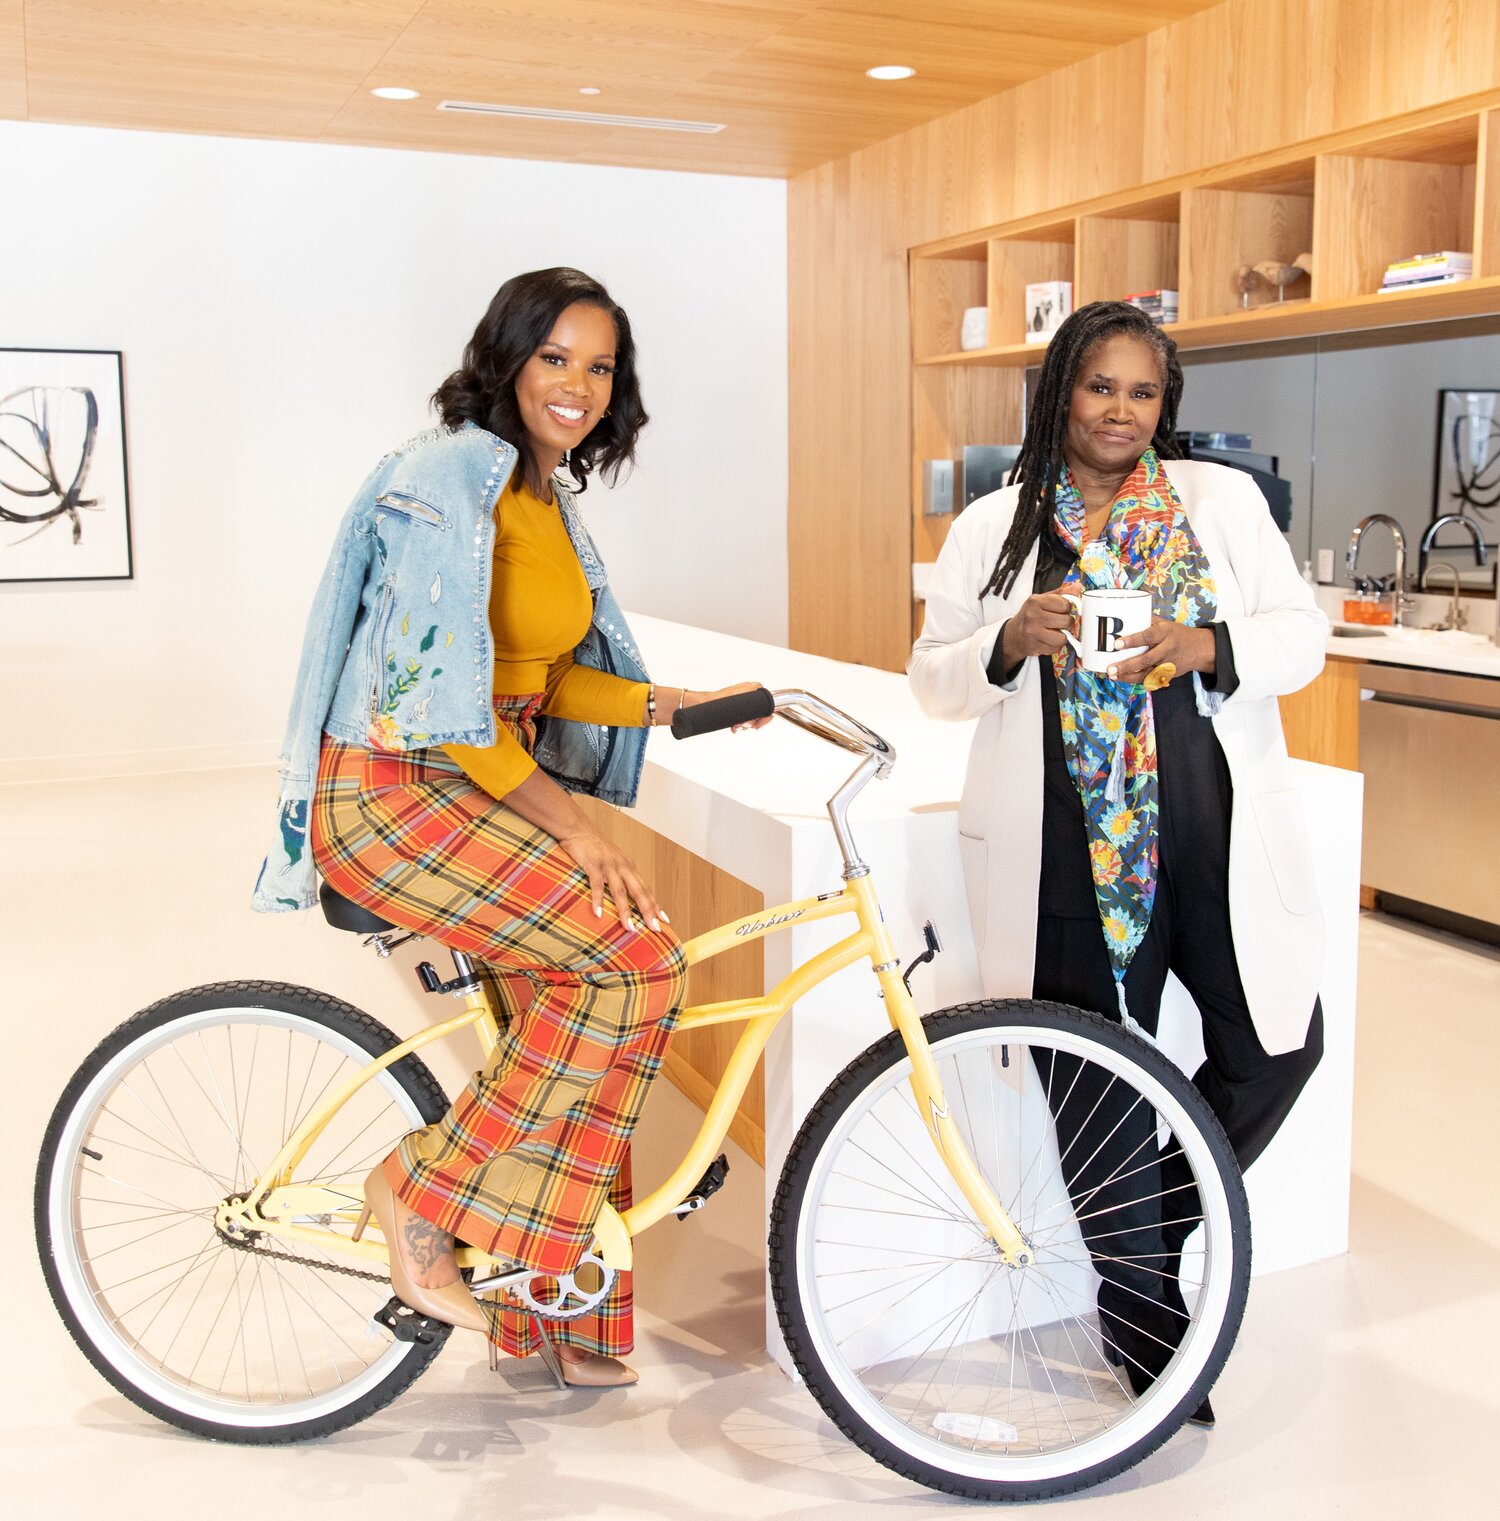 Two women posing beside a yellow bike, radiating joy and friendship.